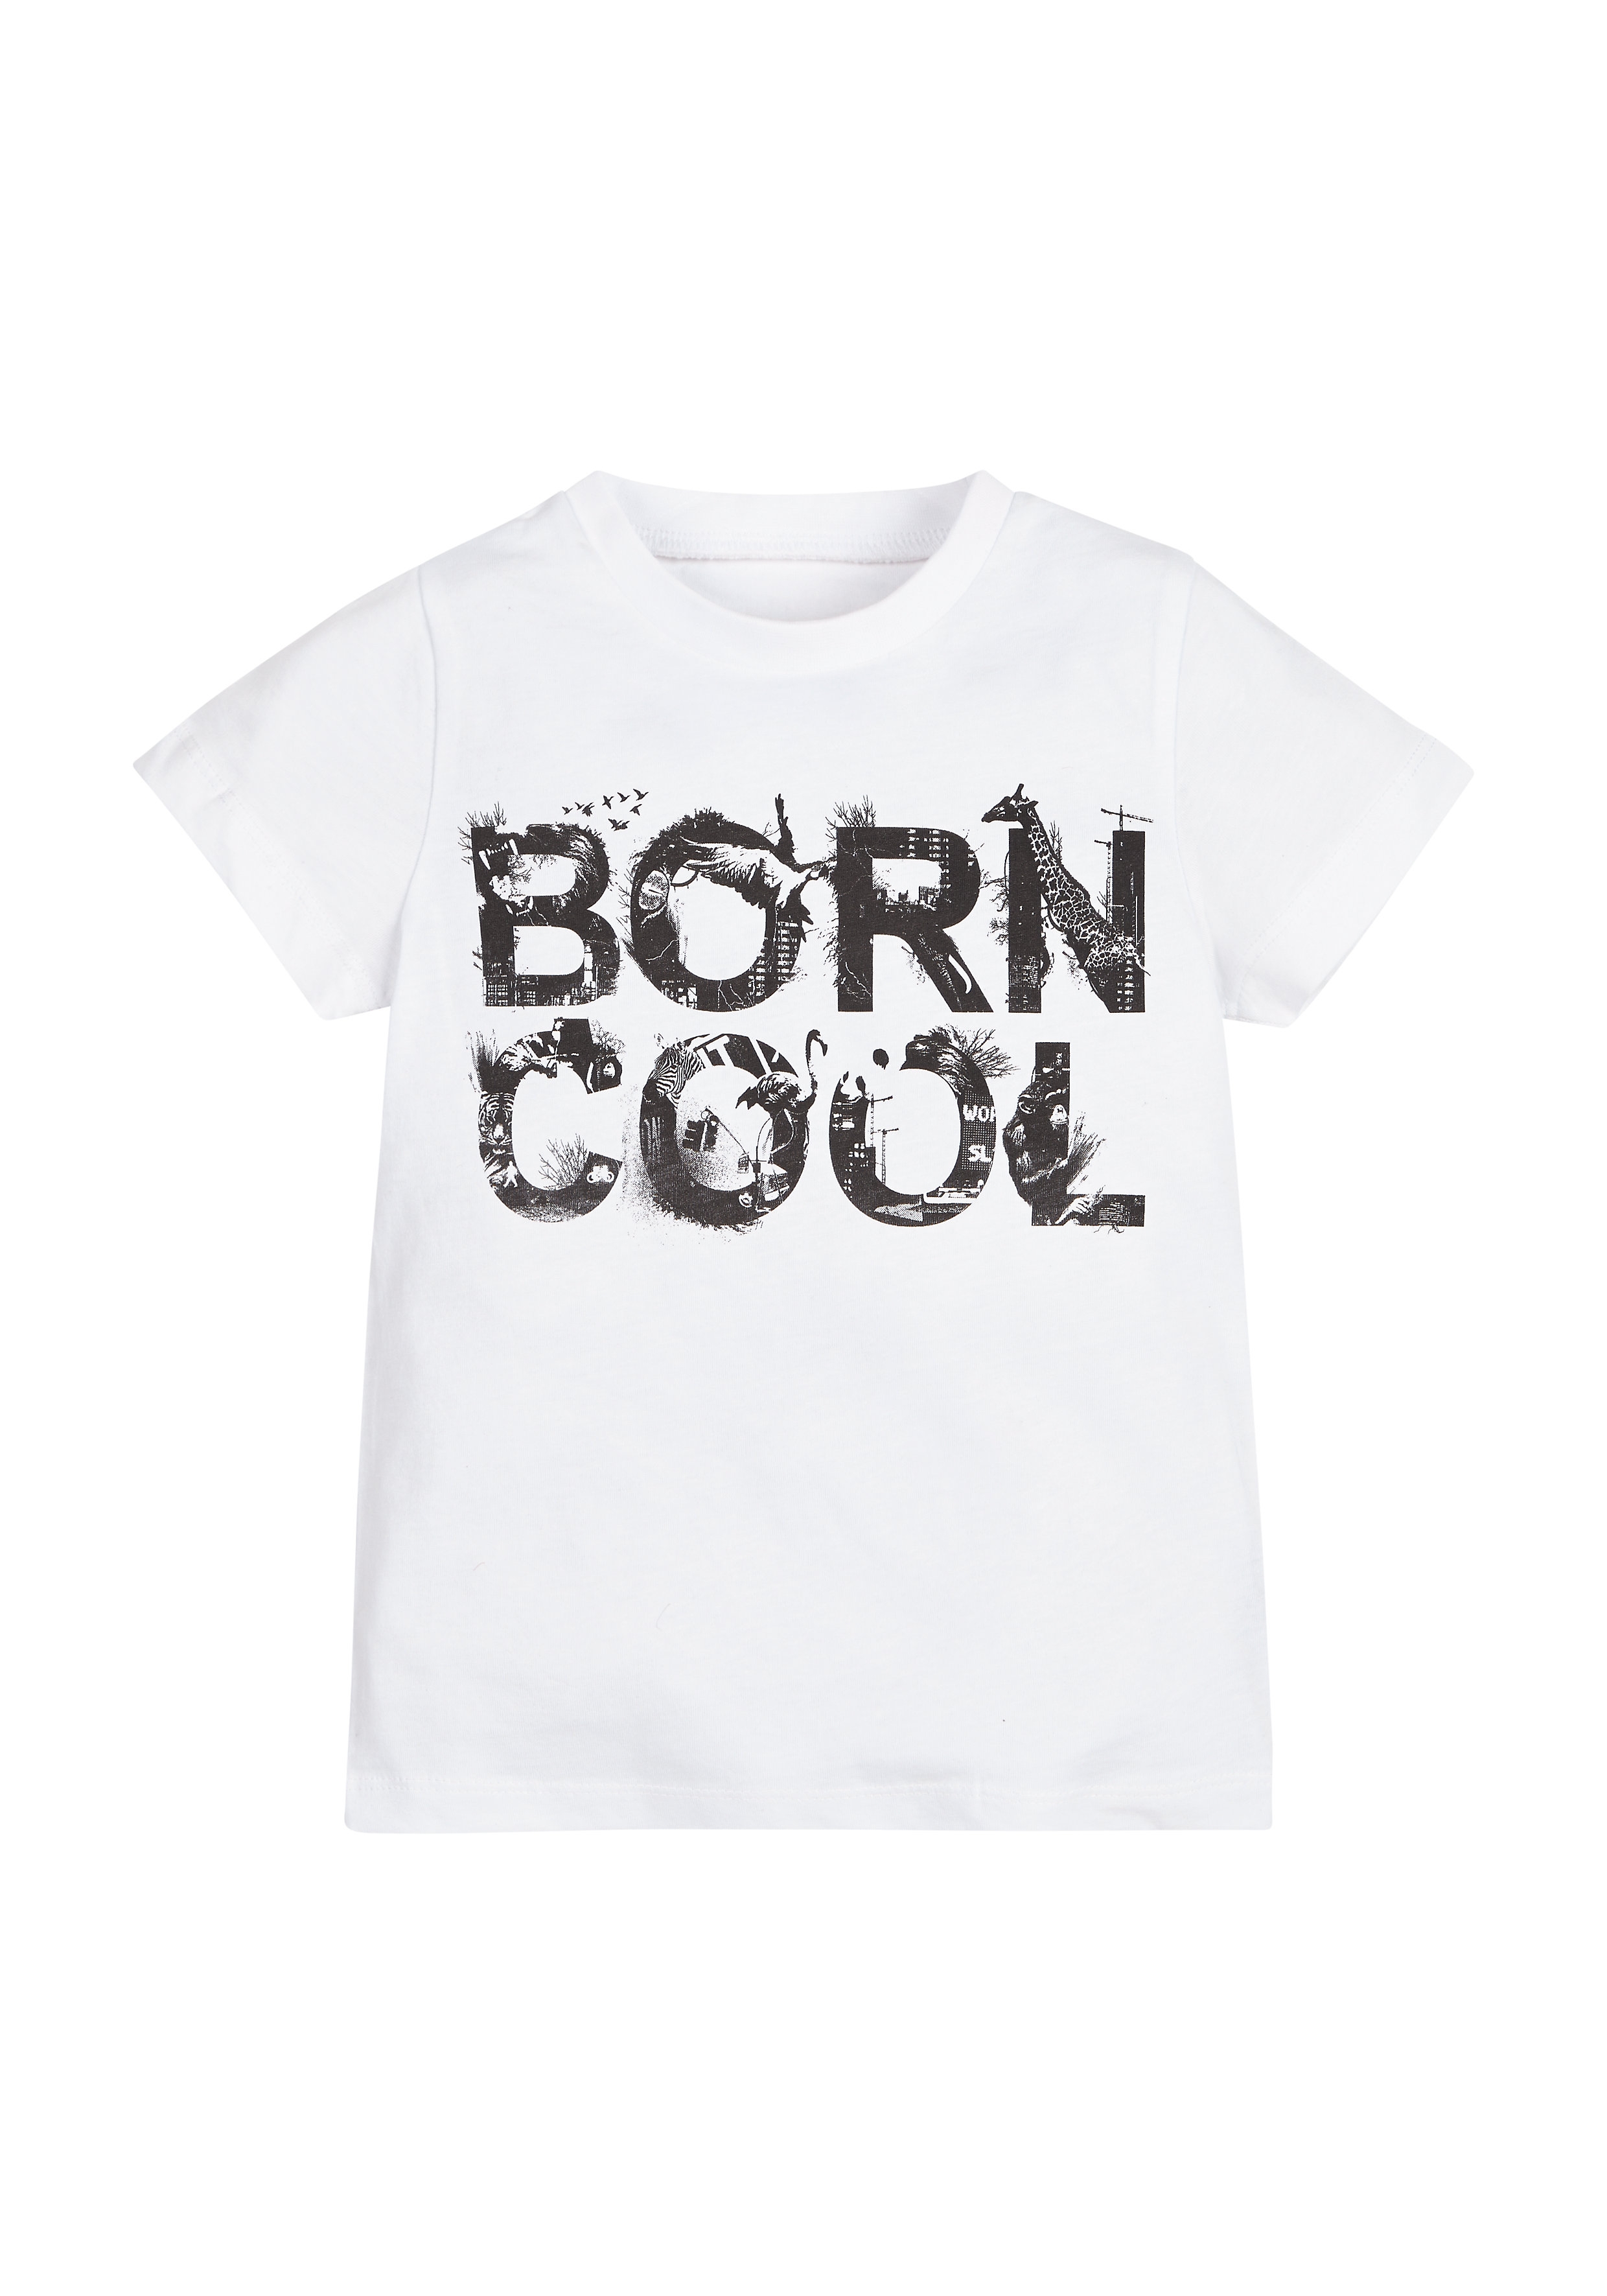 Mothercare | Boys Born Wild T-Shirt - White